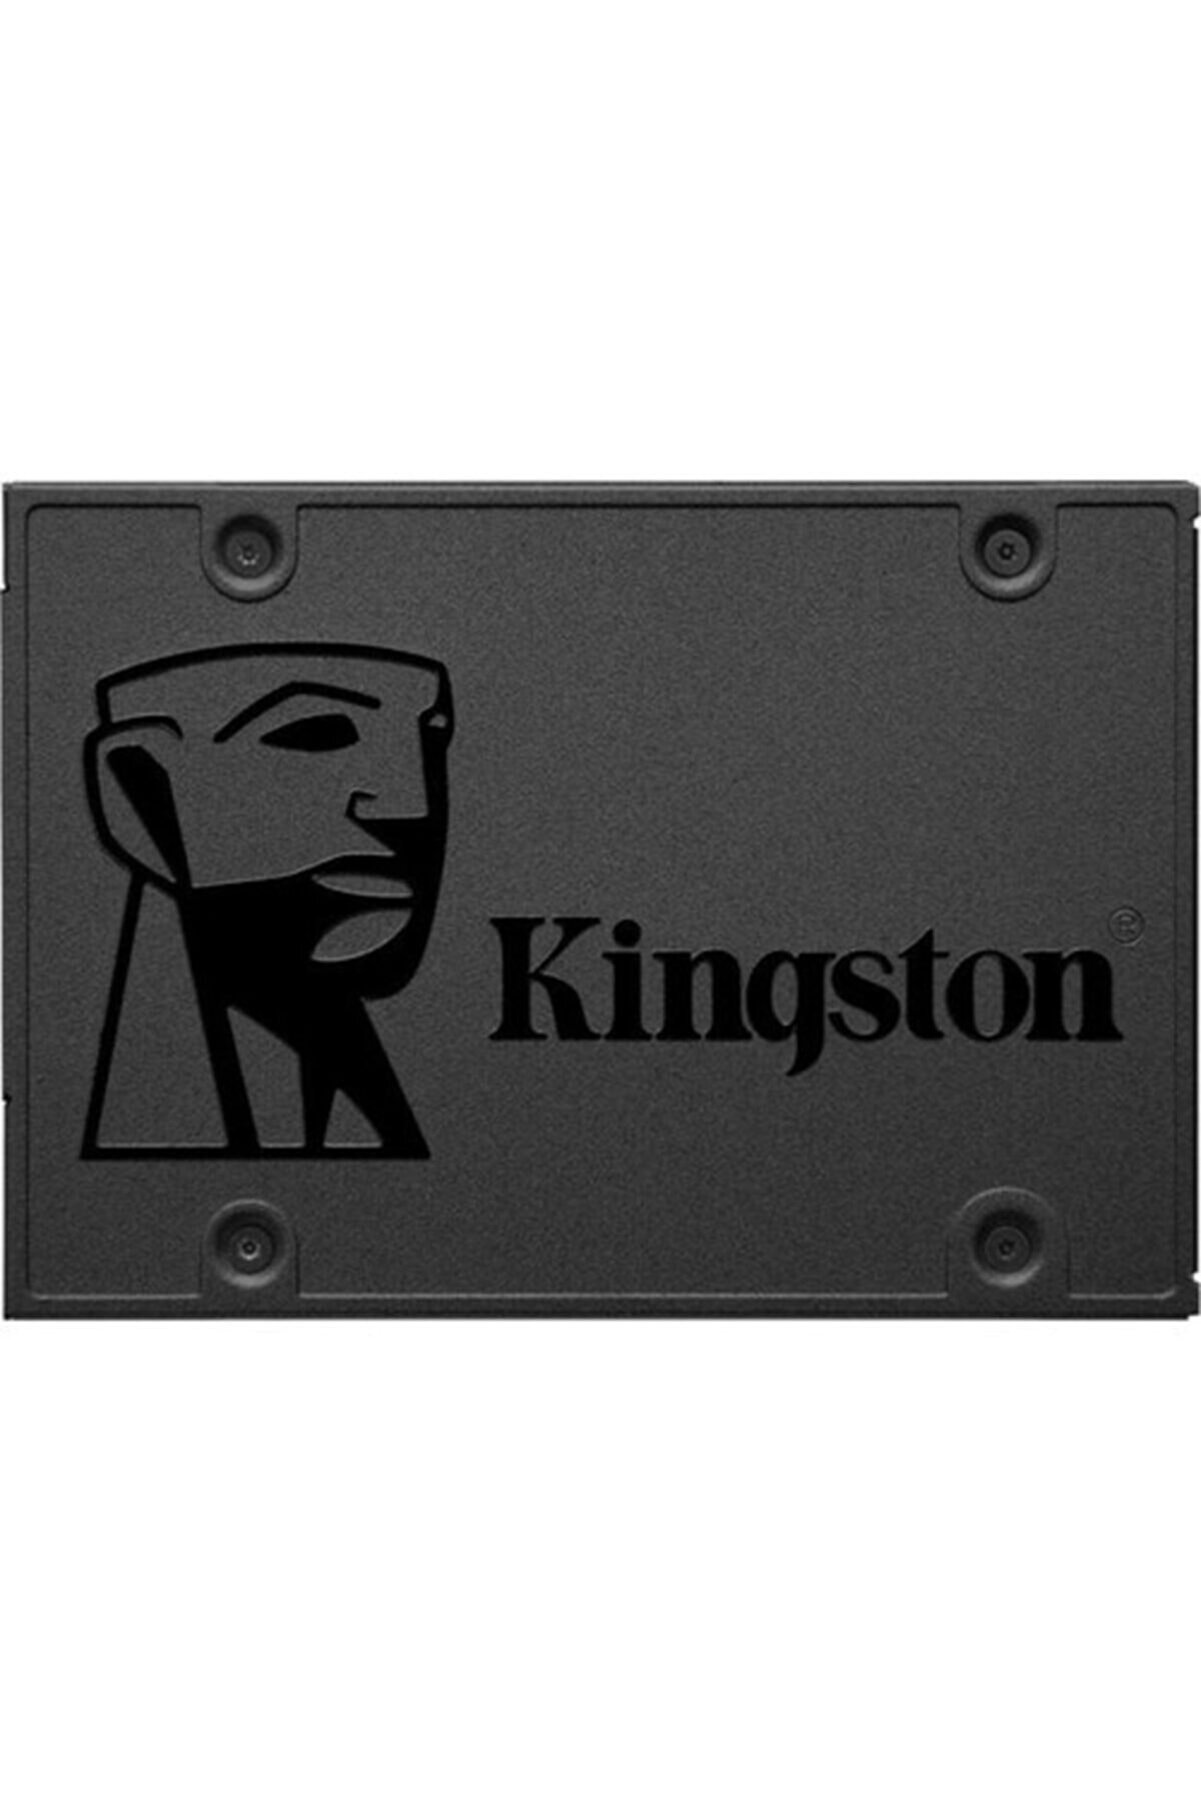 Kingston A400 Ssd 240gb 500mb-350mb/s Sata3 Ssd (Sa400s37/240g)